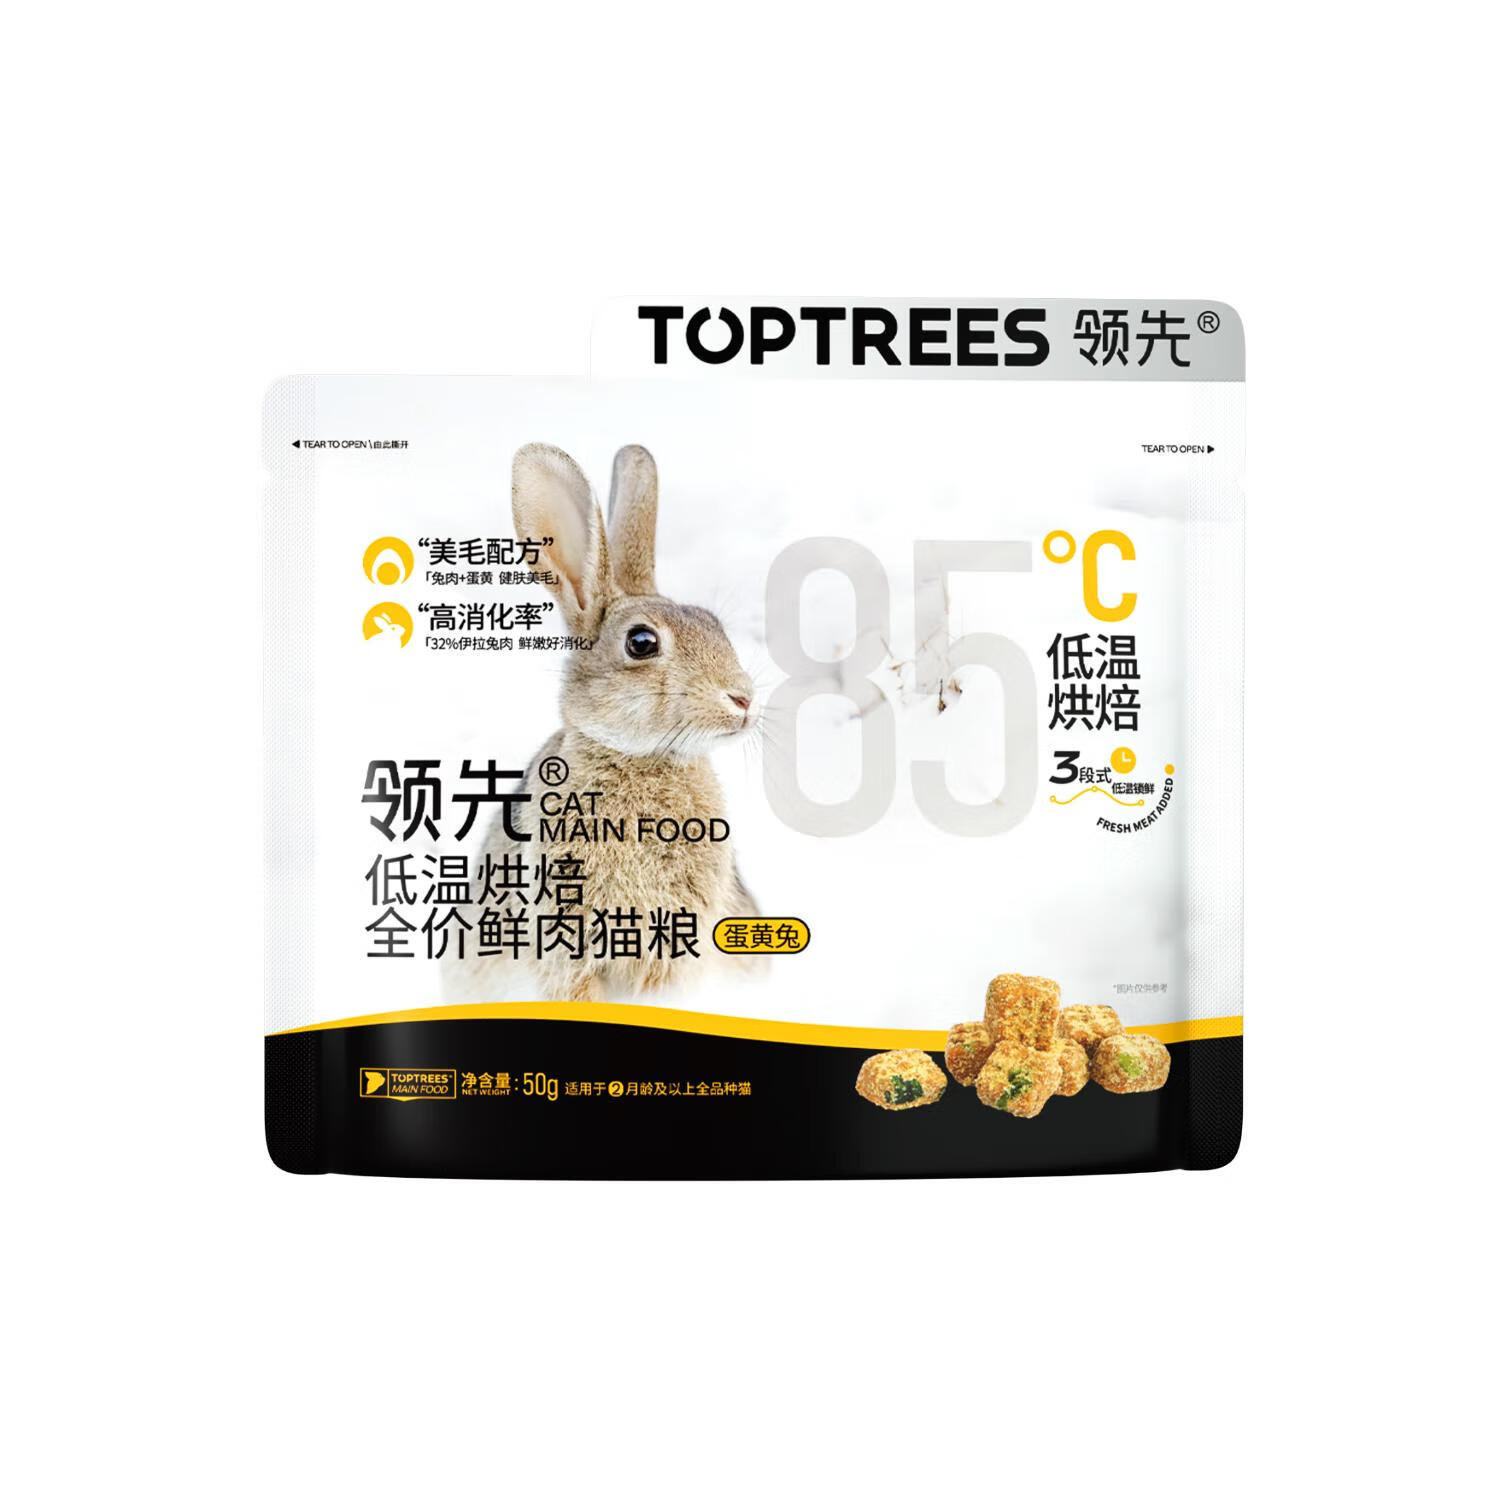 Toptrees 领先 蛋黄兔低温烘焙猫粮 50g 9.9元